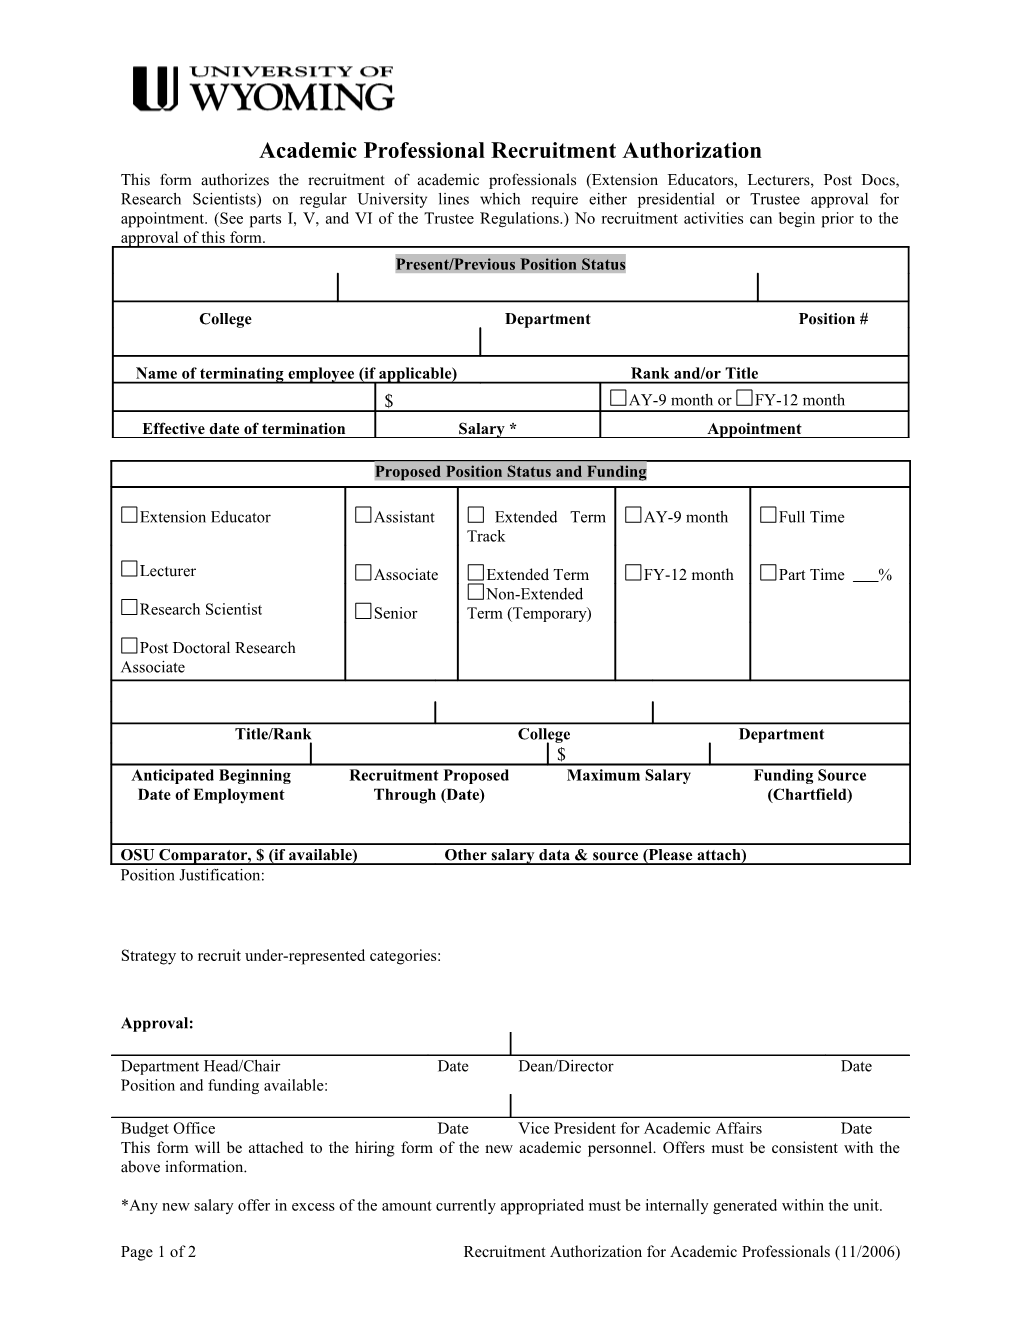 AP Recruitment Authorization